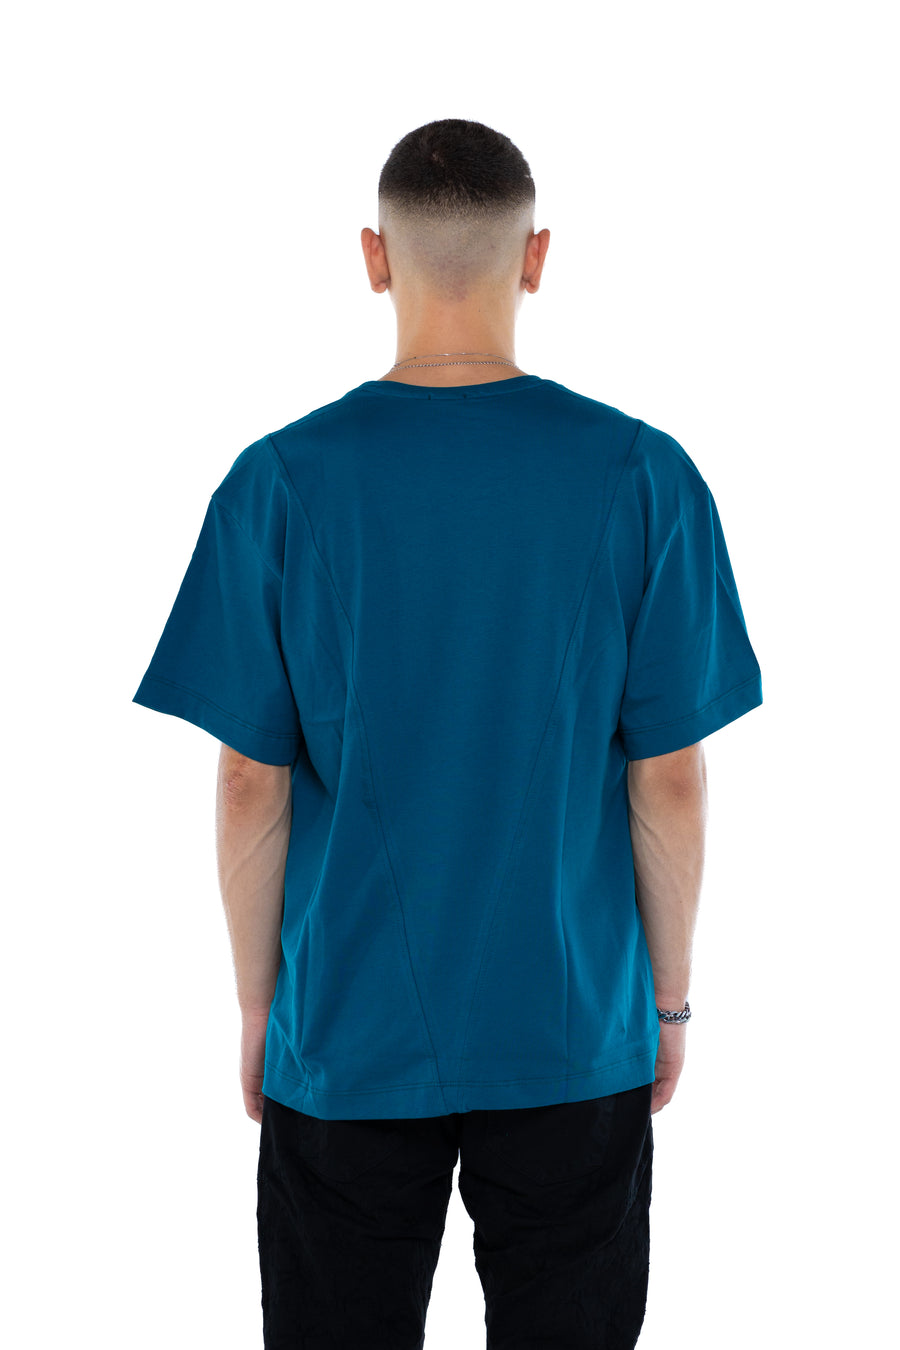 gavensemble t-shirt tee02